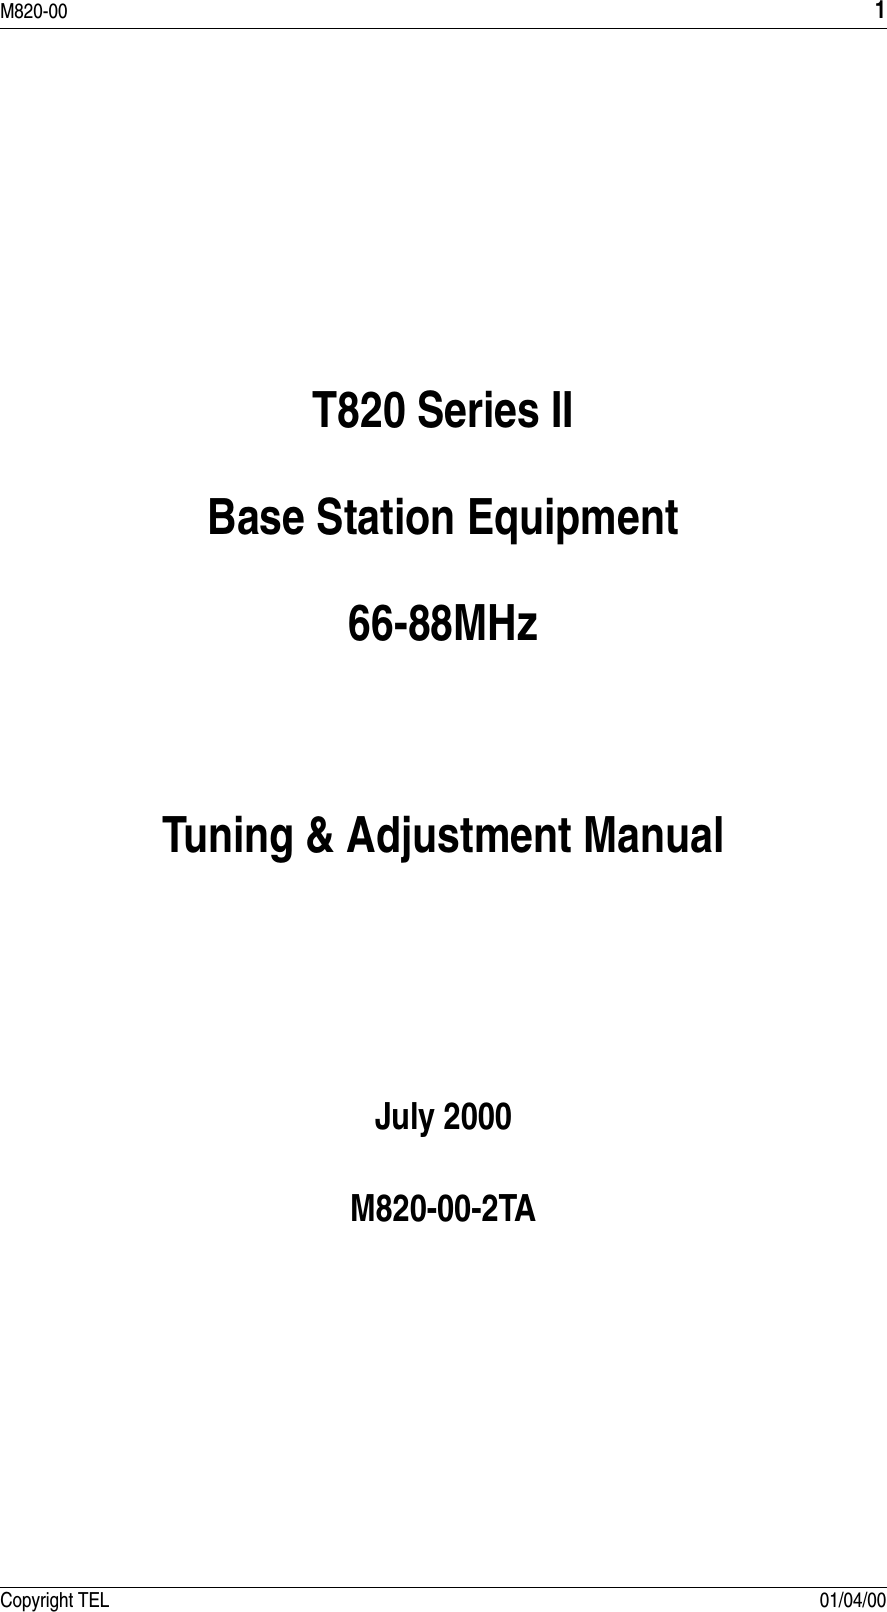 M820-00 1Copyright TEL 01/04/00T820 Series IIBase Station Equipment66-88MHzTuning &amp; Adjustment ManualJuly 2000M820-00-2TA